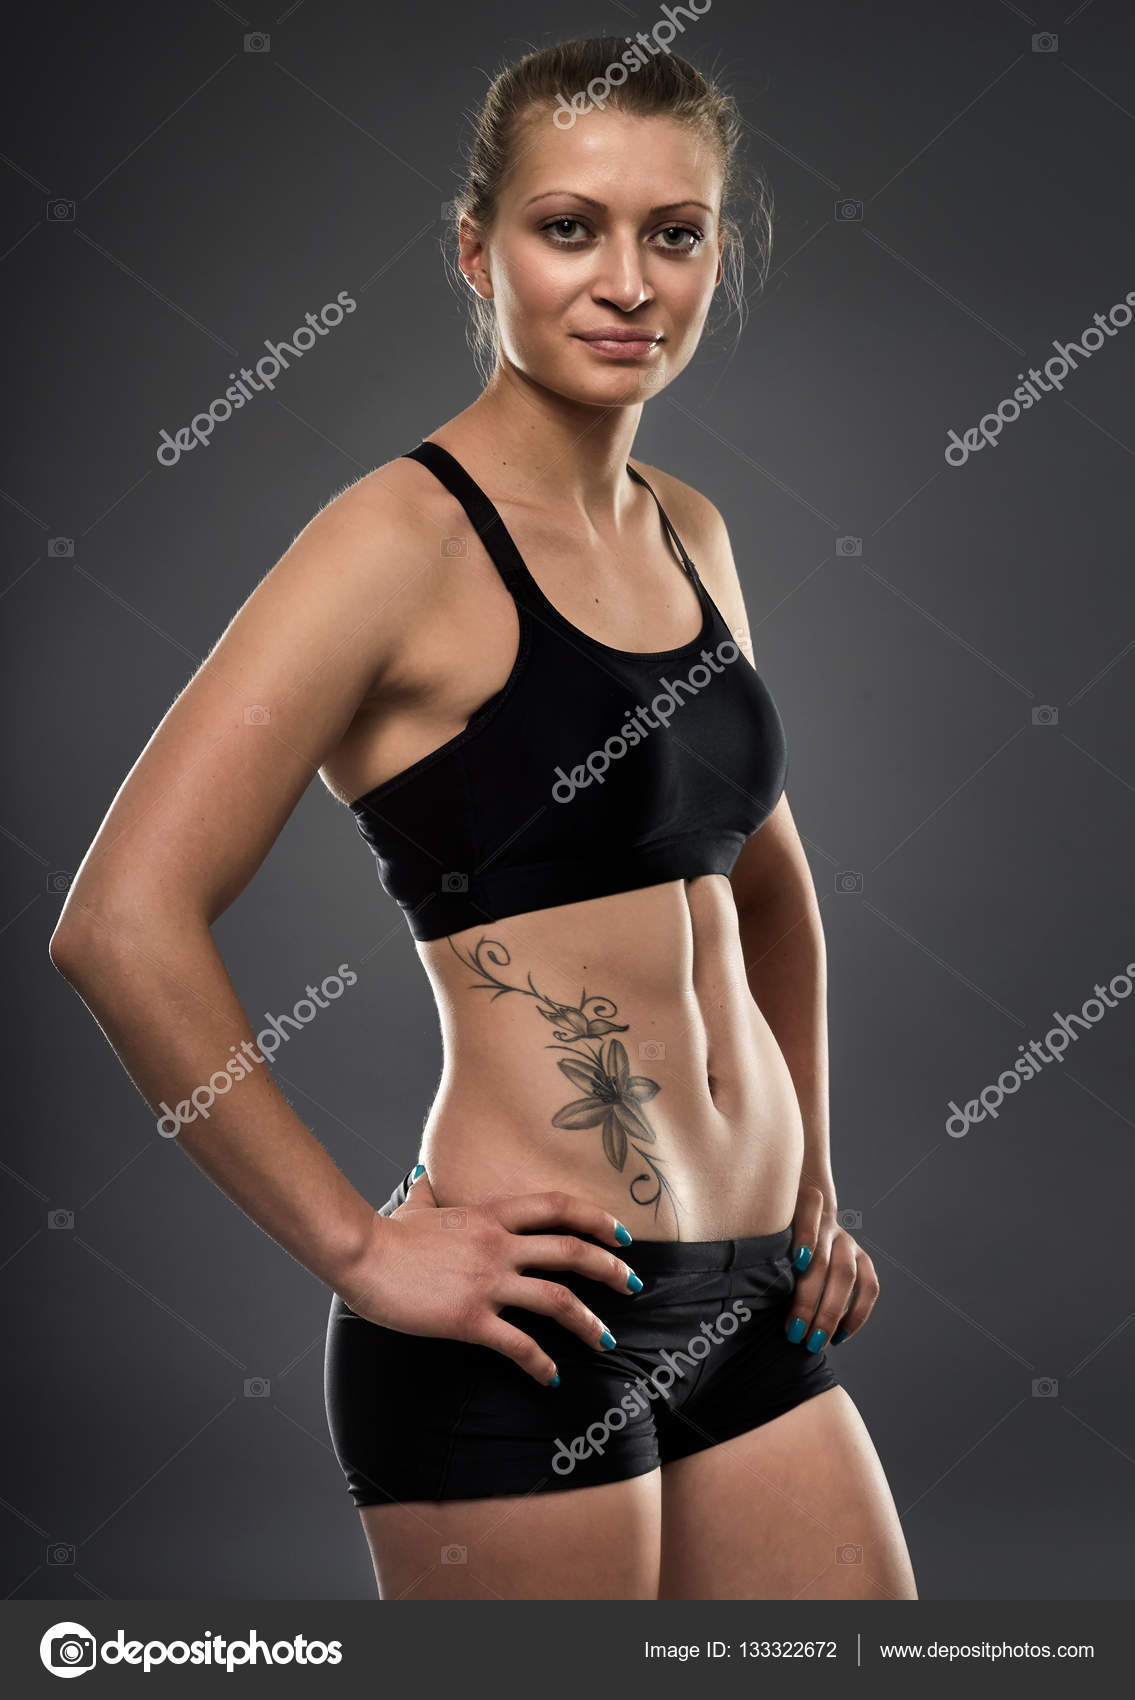 Fitness Female posing — Stock Photo © Xalanx #133322672